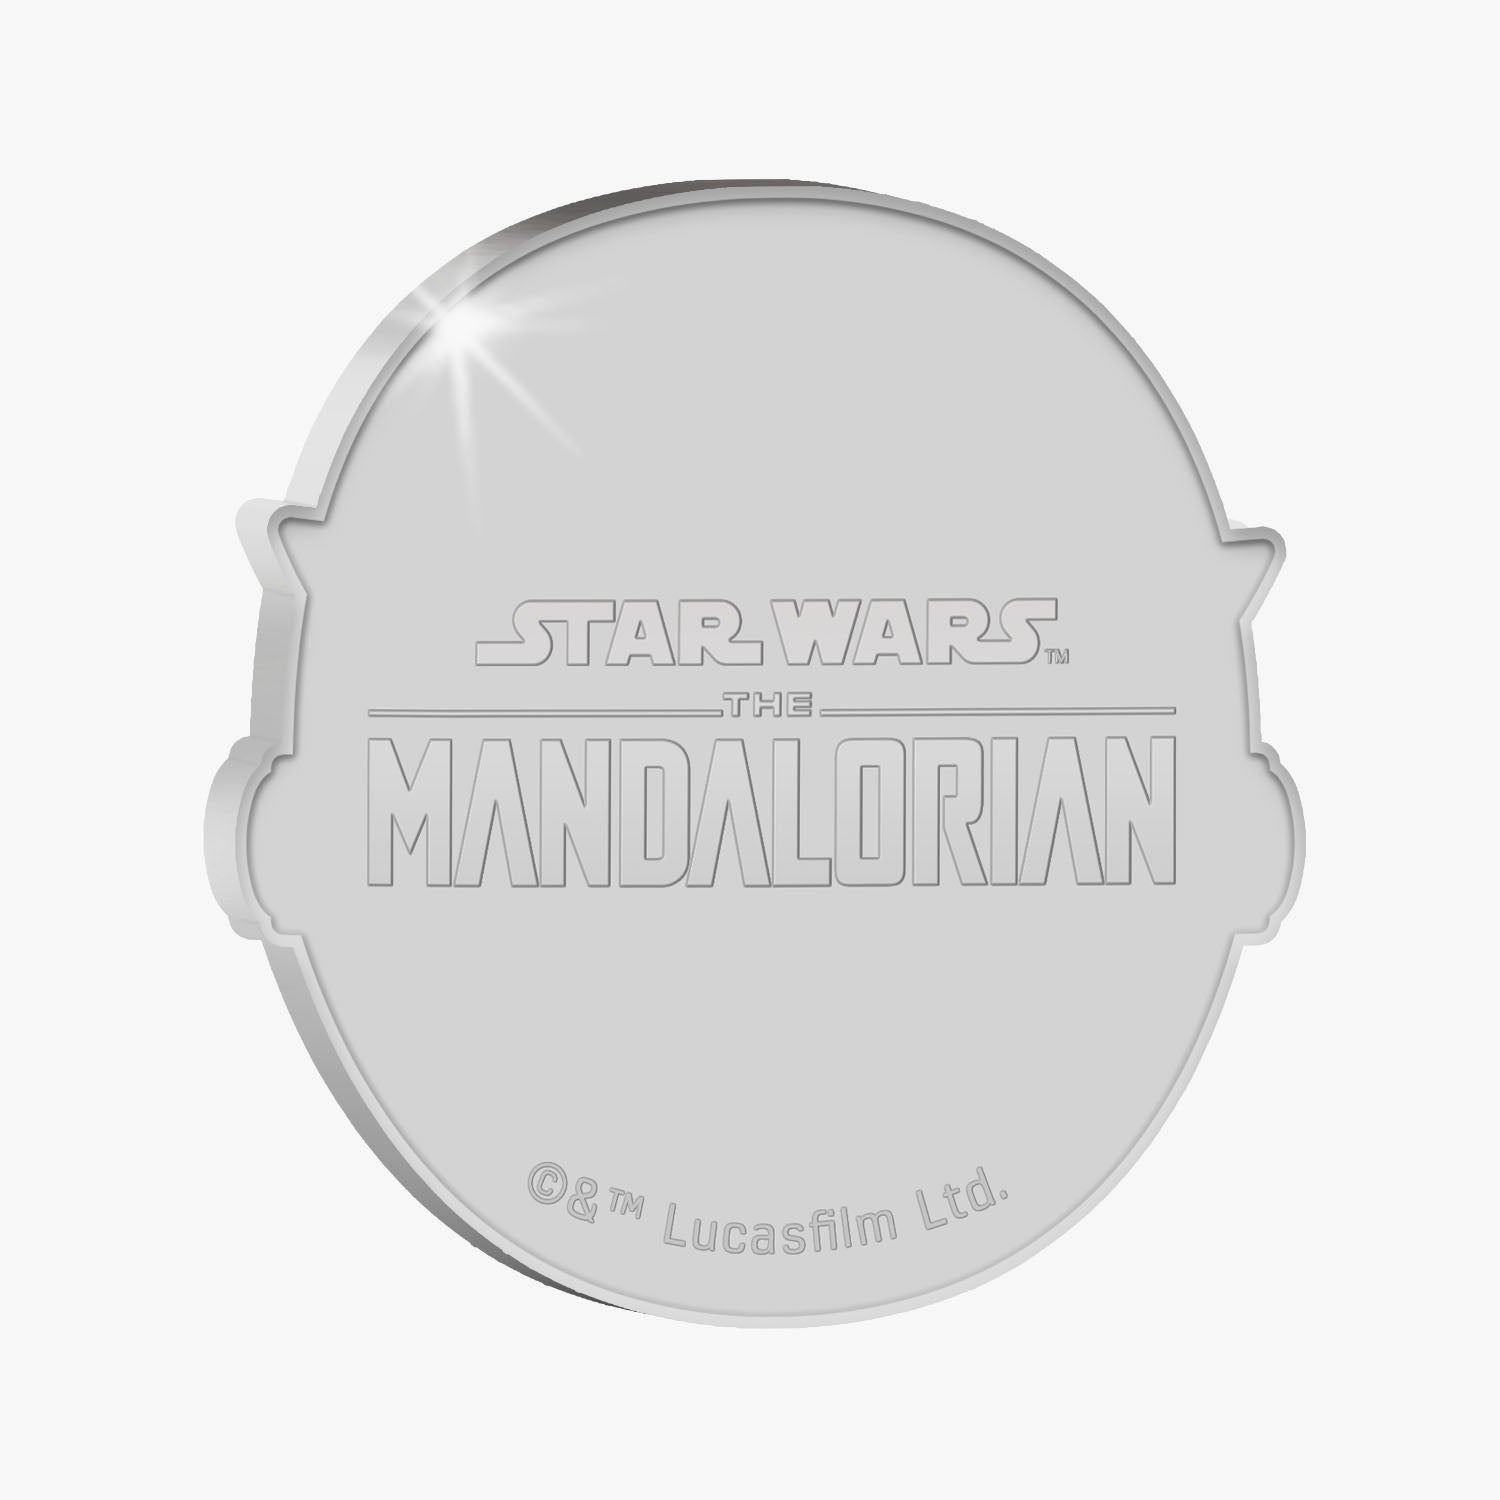 The Mandalorian - Baby Yoda Shaped Star Wars Commemorative